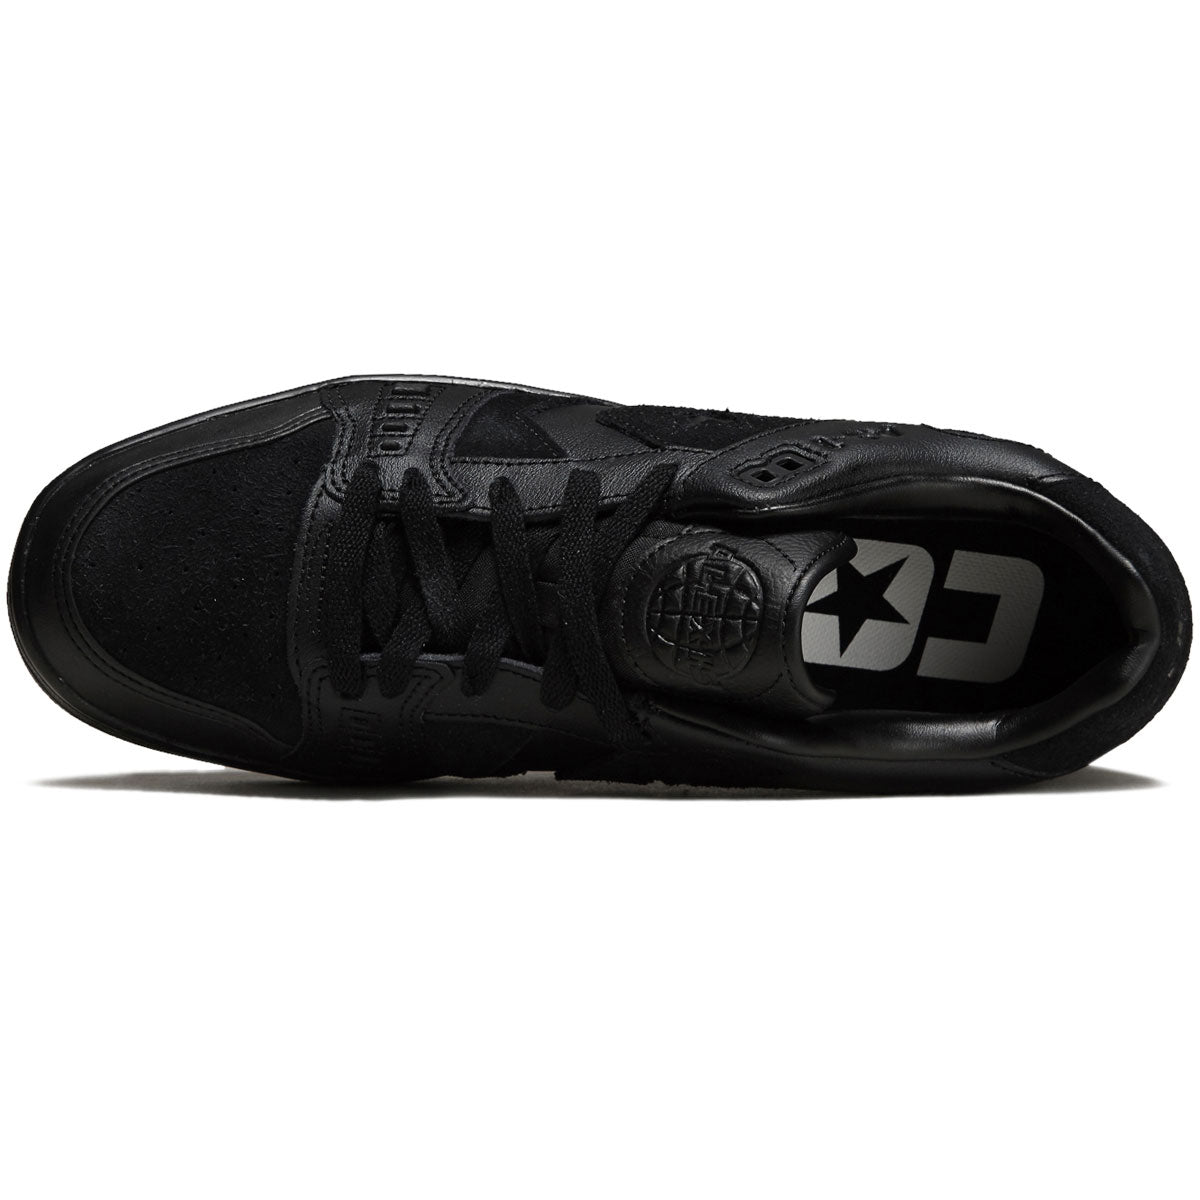 Converse AS-1 Pro Shoes - Black/Black/Black image 3